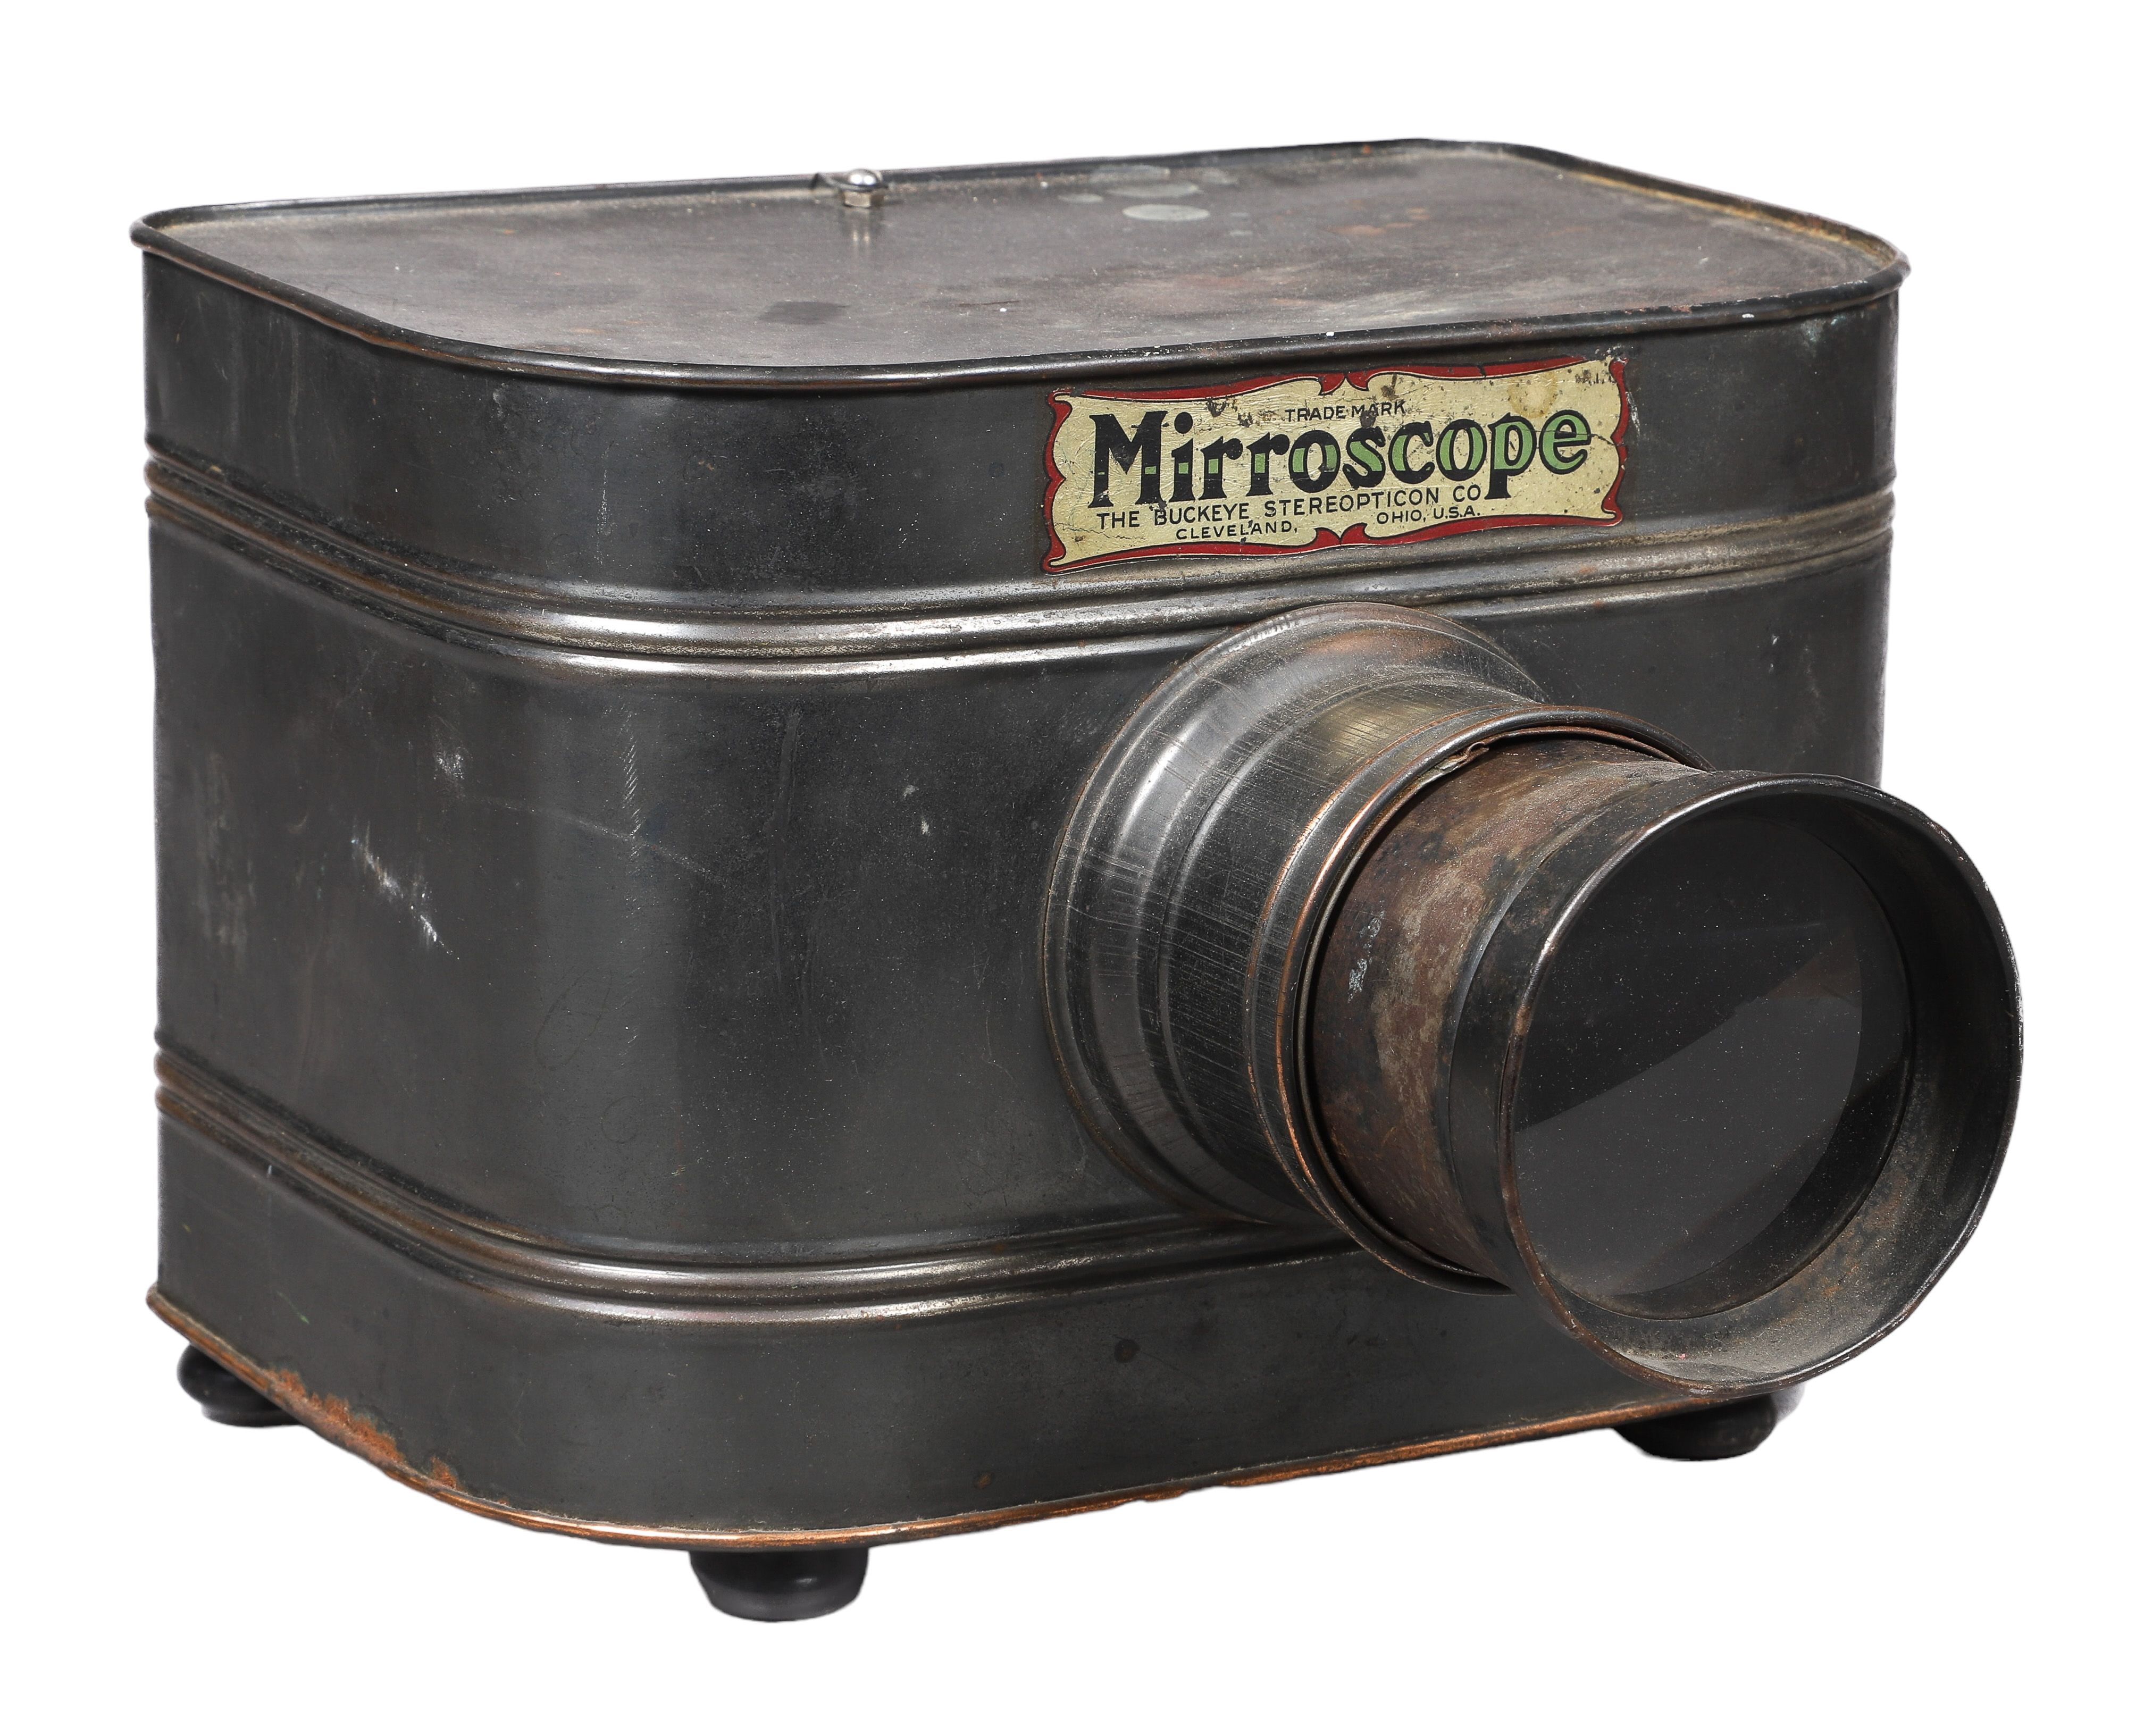 Mirroscope magic lantern, circa 1912